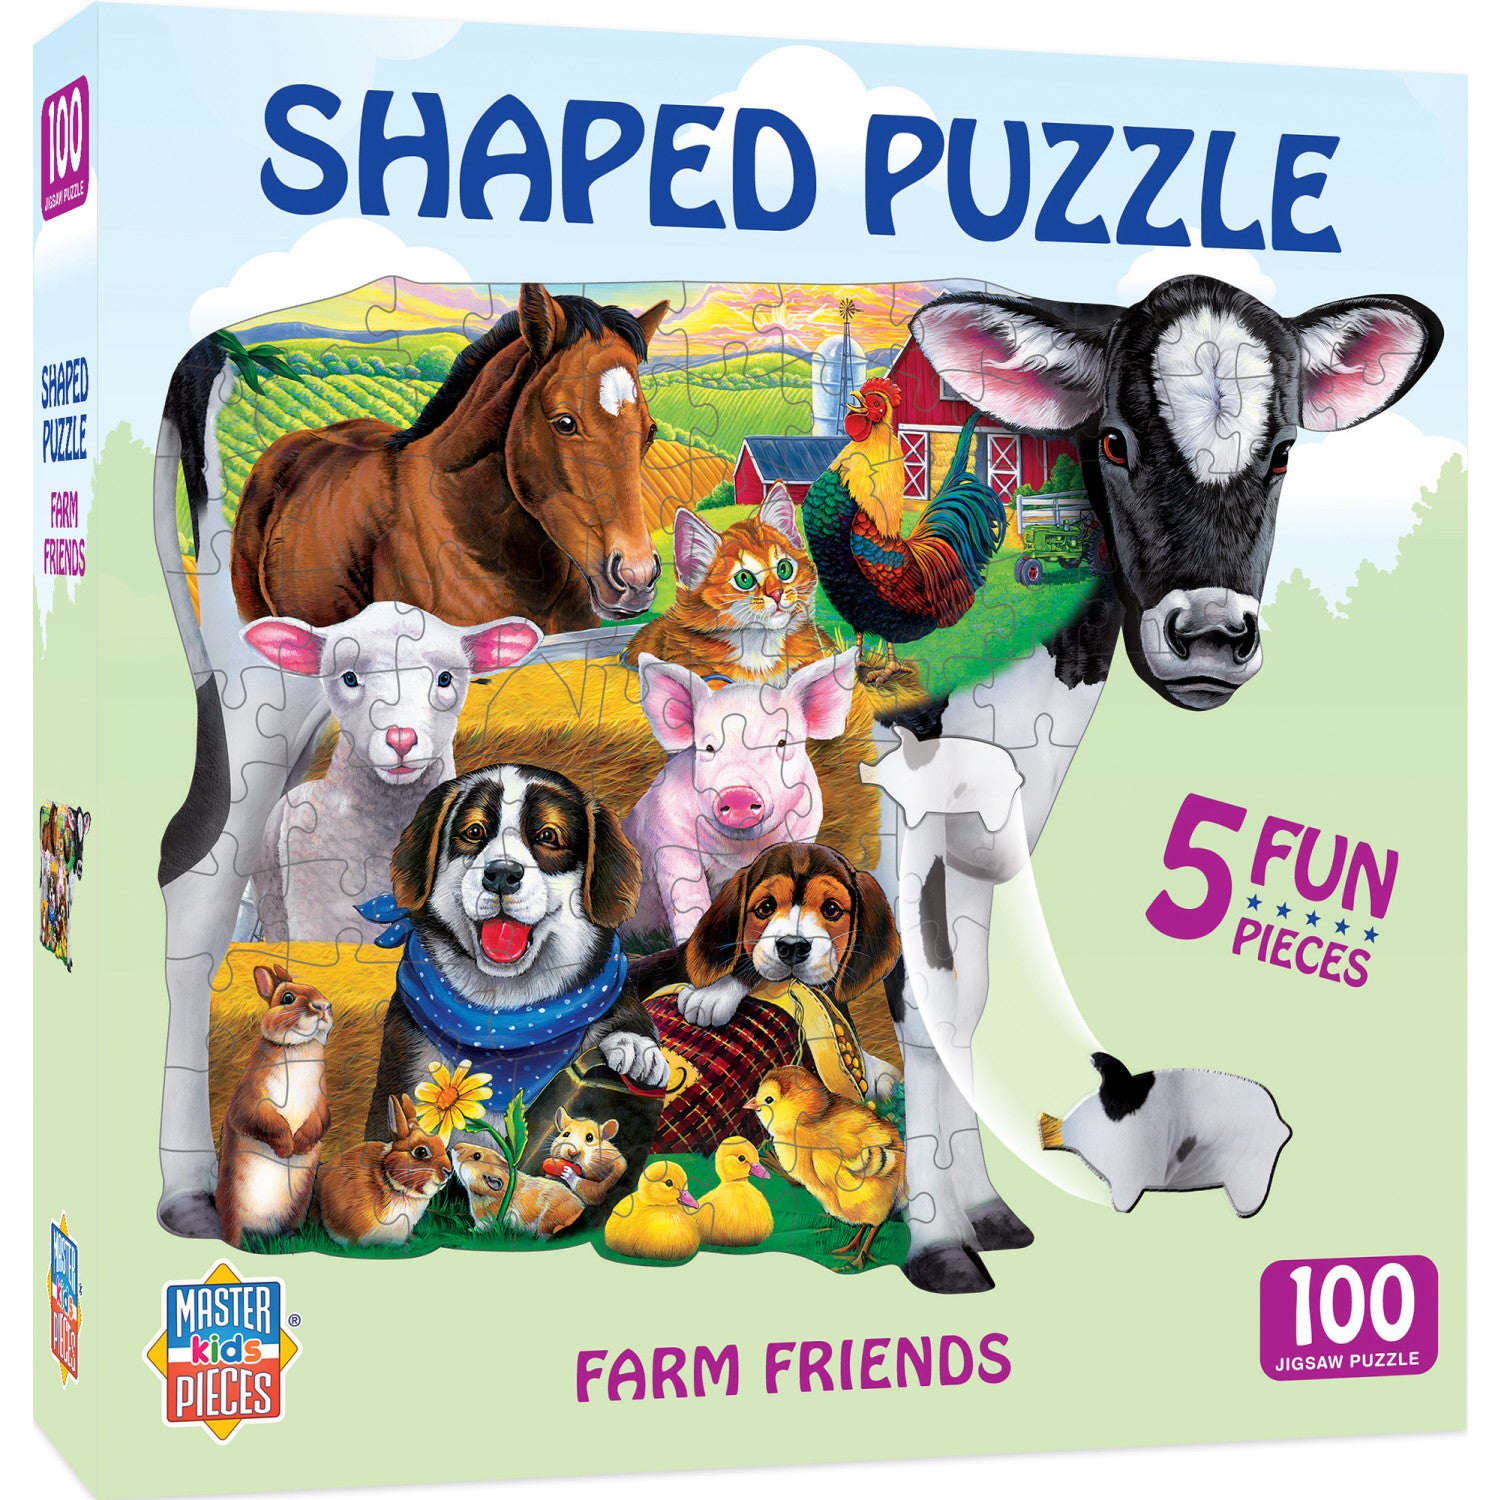 Farm Friends - 100 Piece Shaped Jigsaw Puzzle